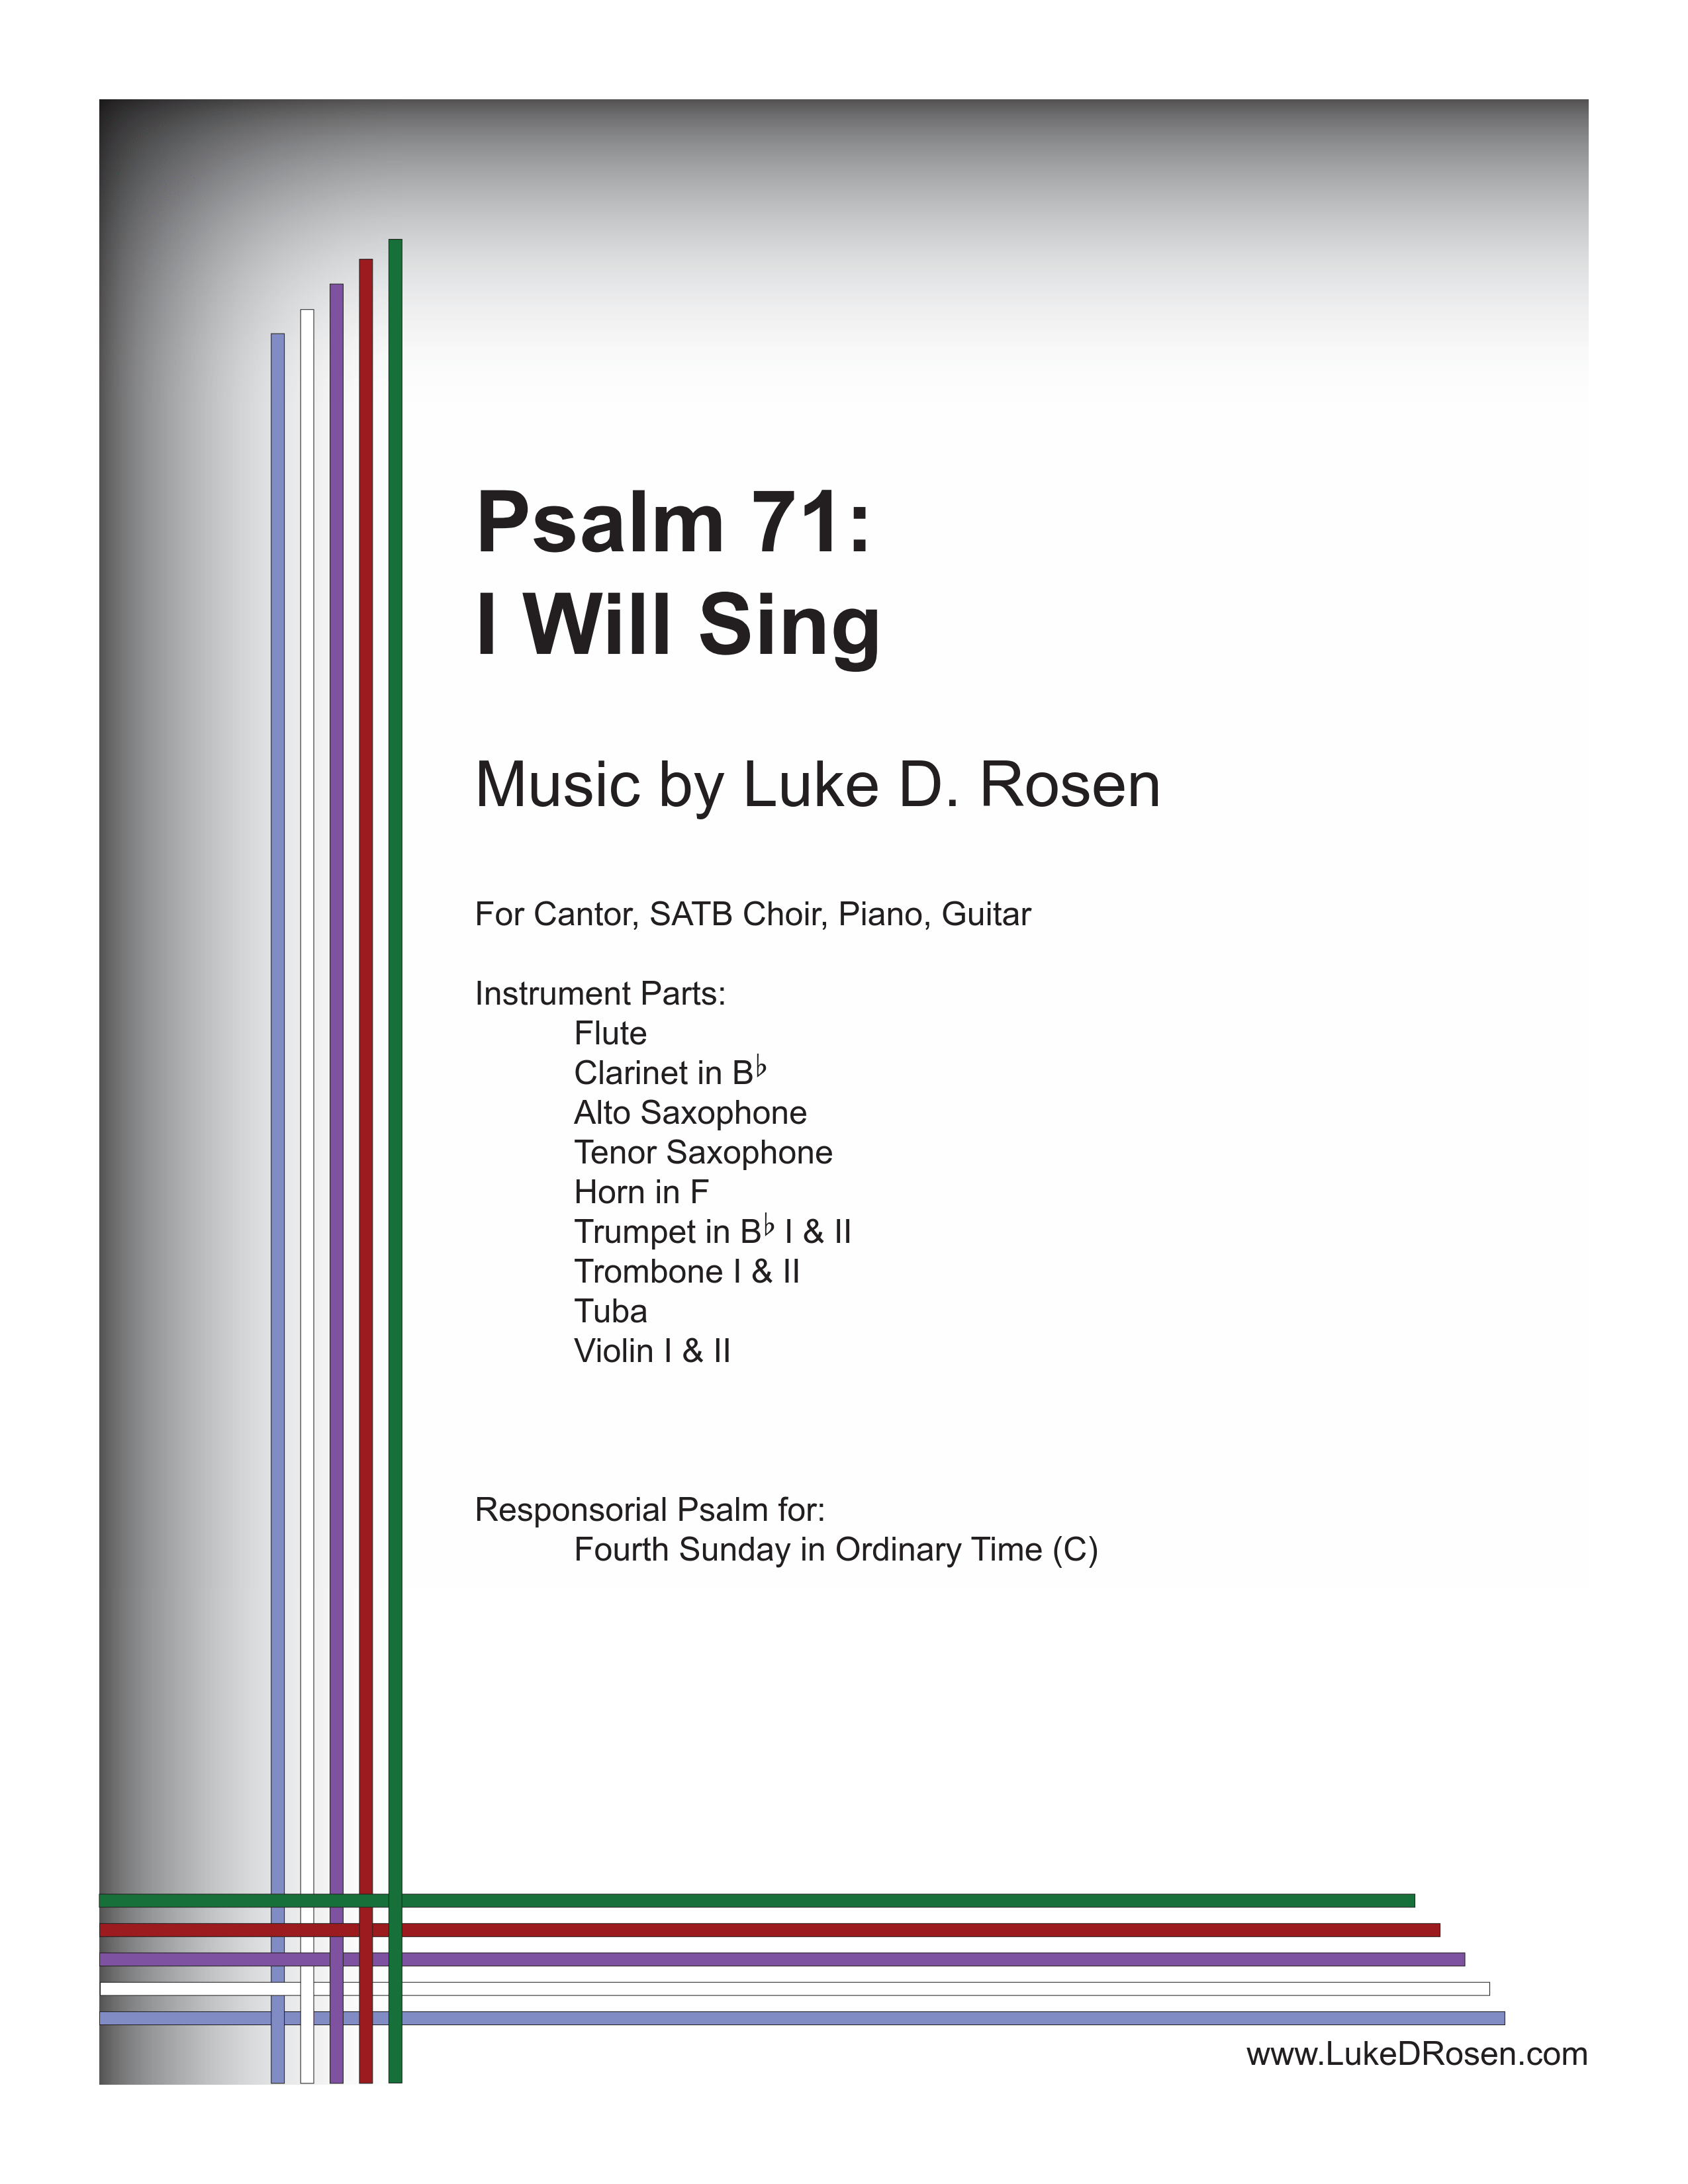 Psalm 71 – I Will Sing (Rosen)